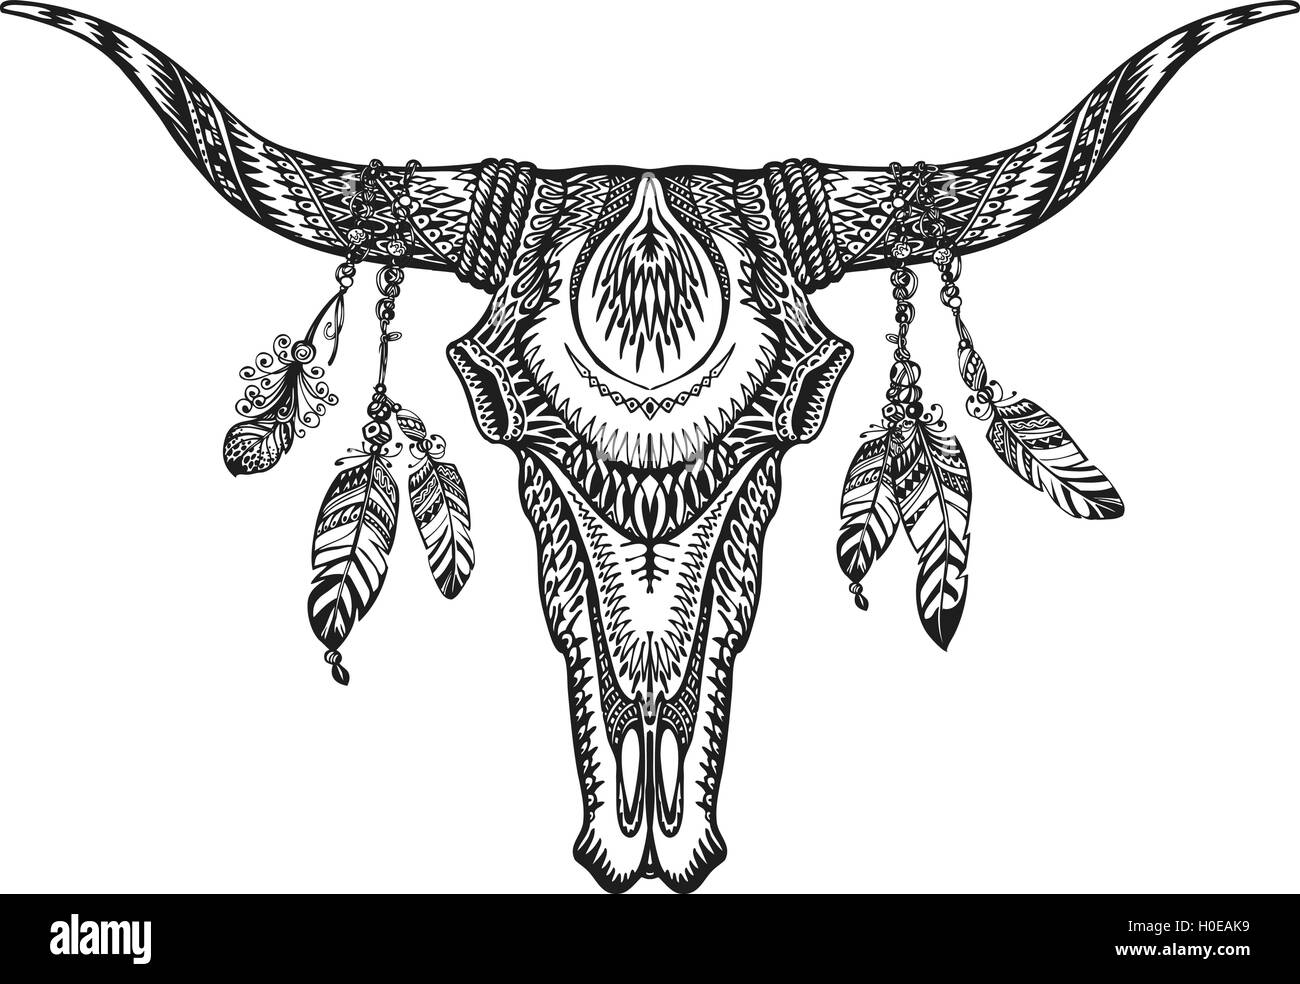 Vector tribal animal skull illustration with ethnic ornaments Stock Vector